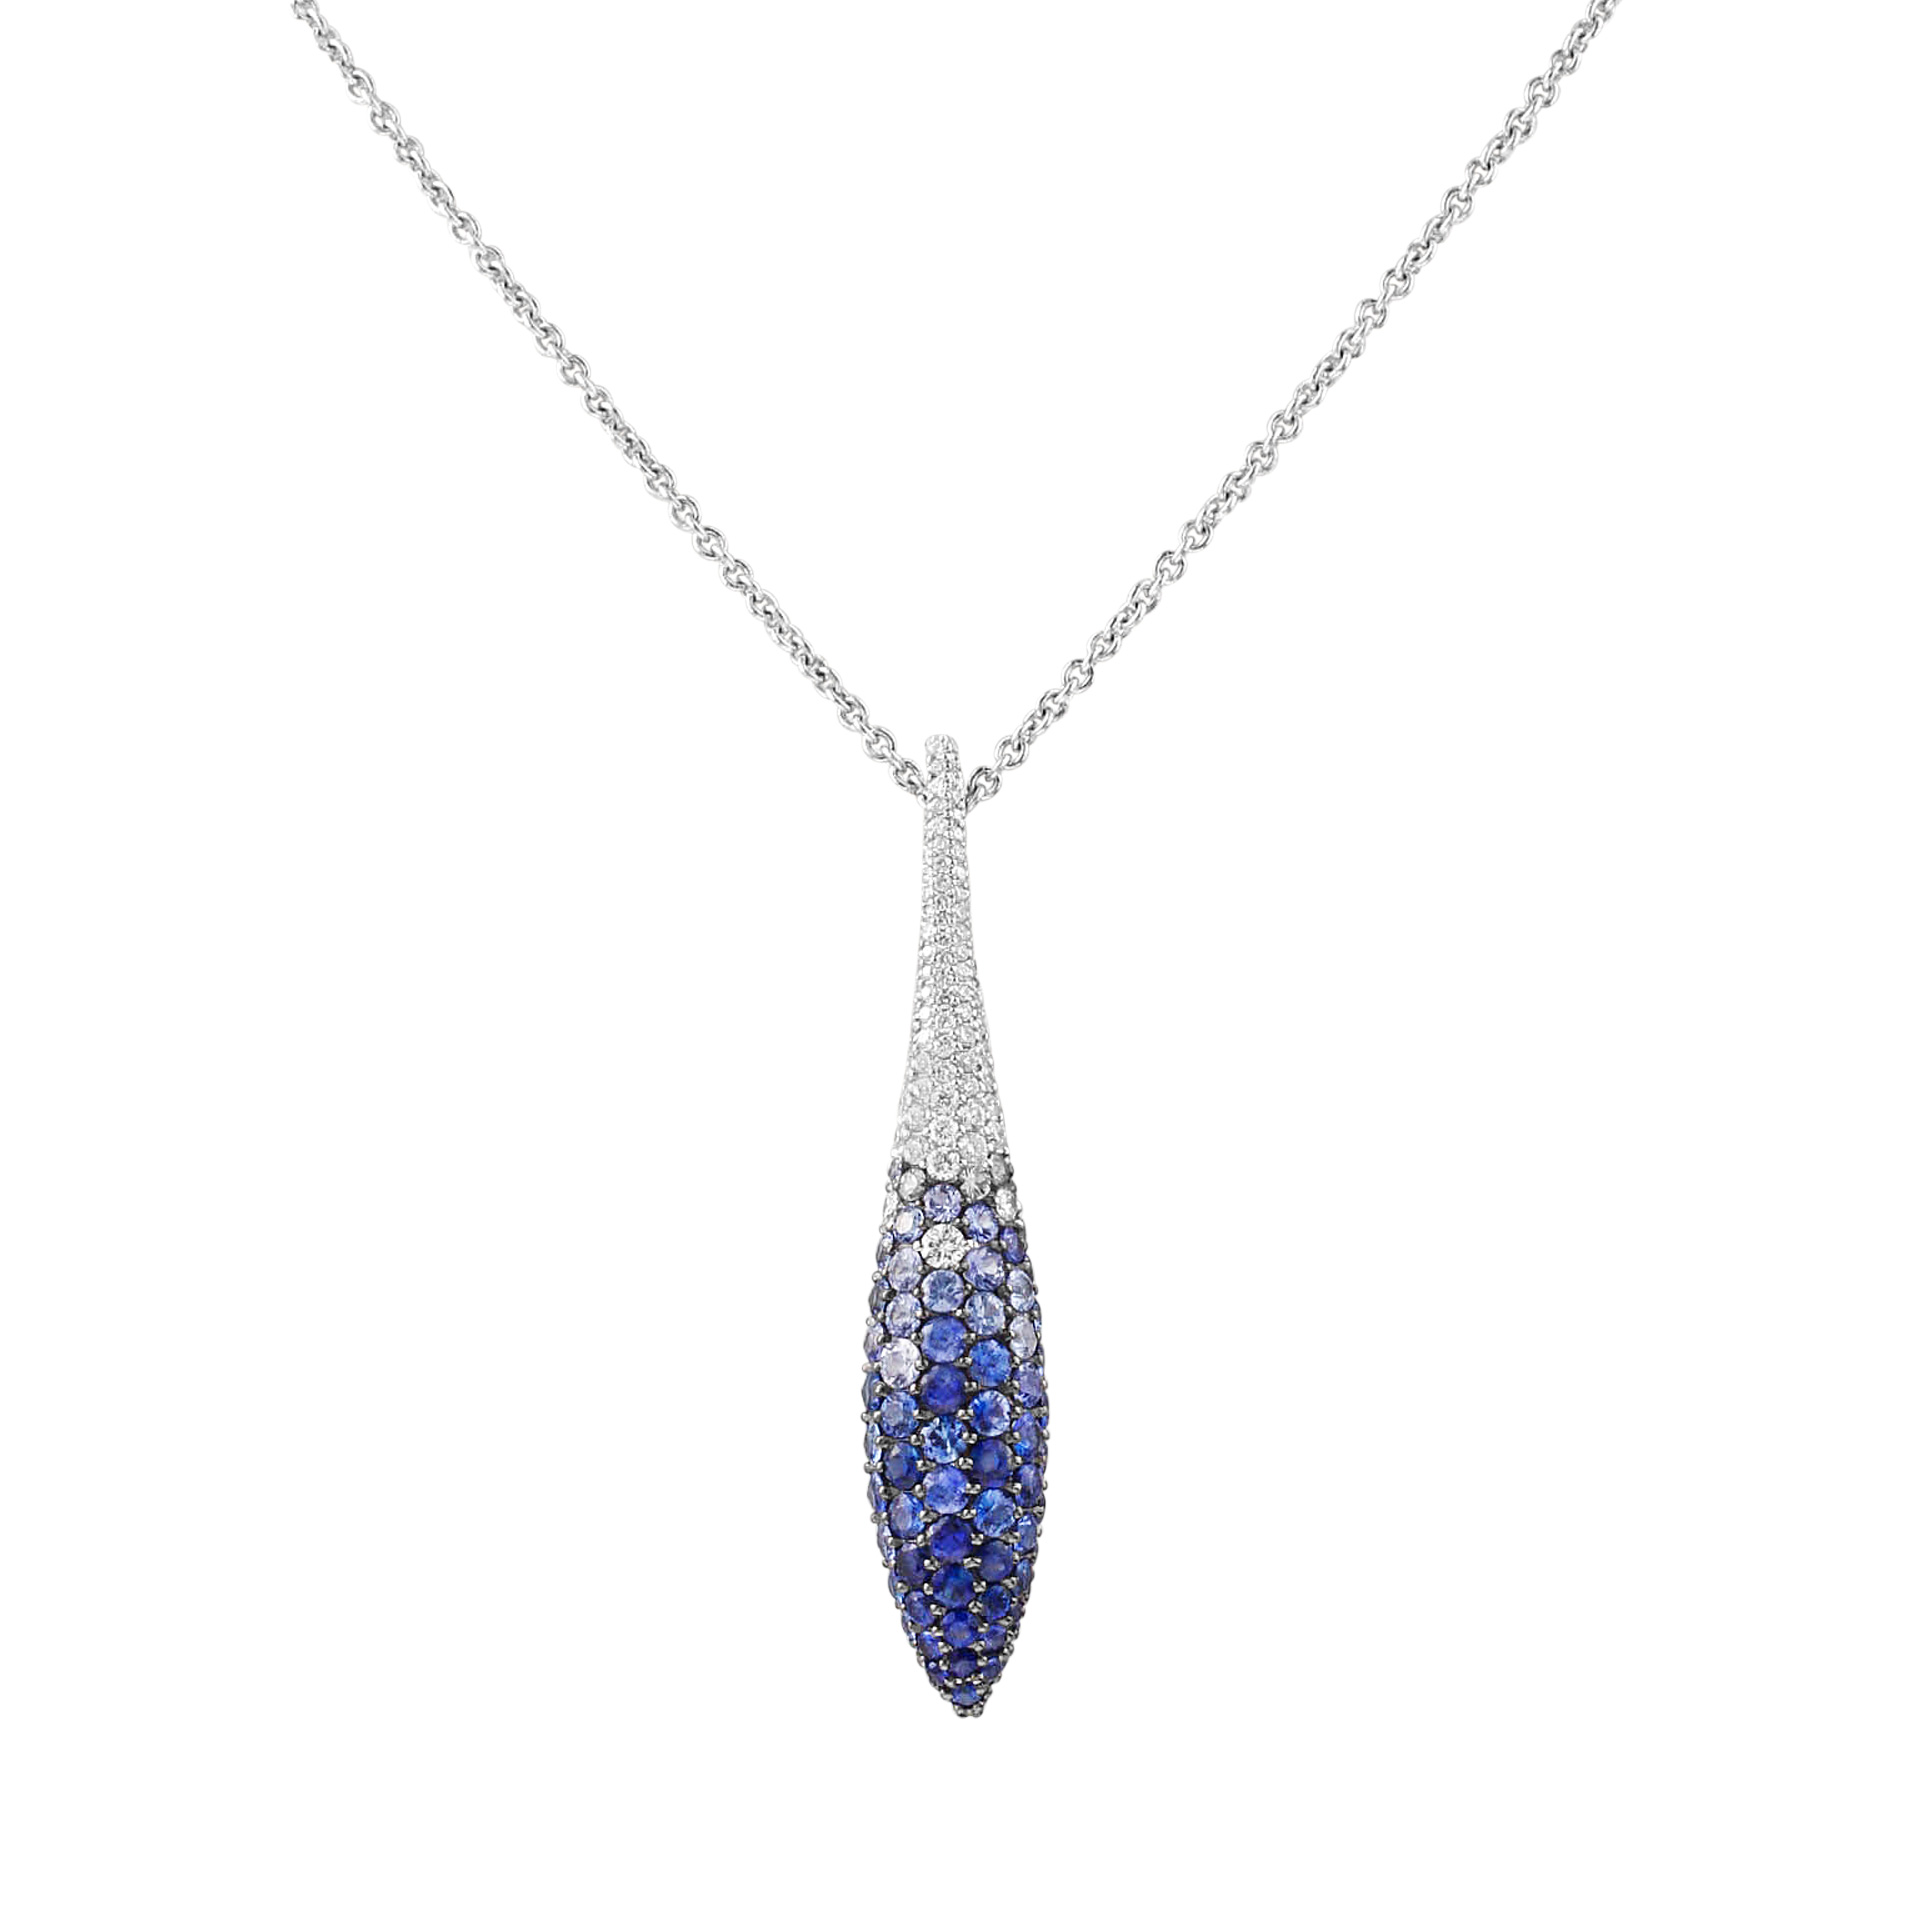 Salavetti ELITE sapphire & diamond drop pendant necklace in 18k, 0.36 cts dia 1.78 cts sapphires